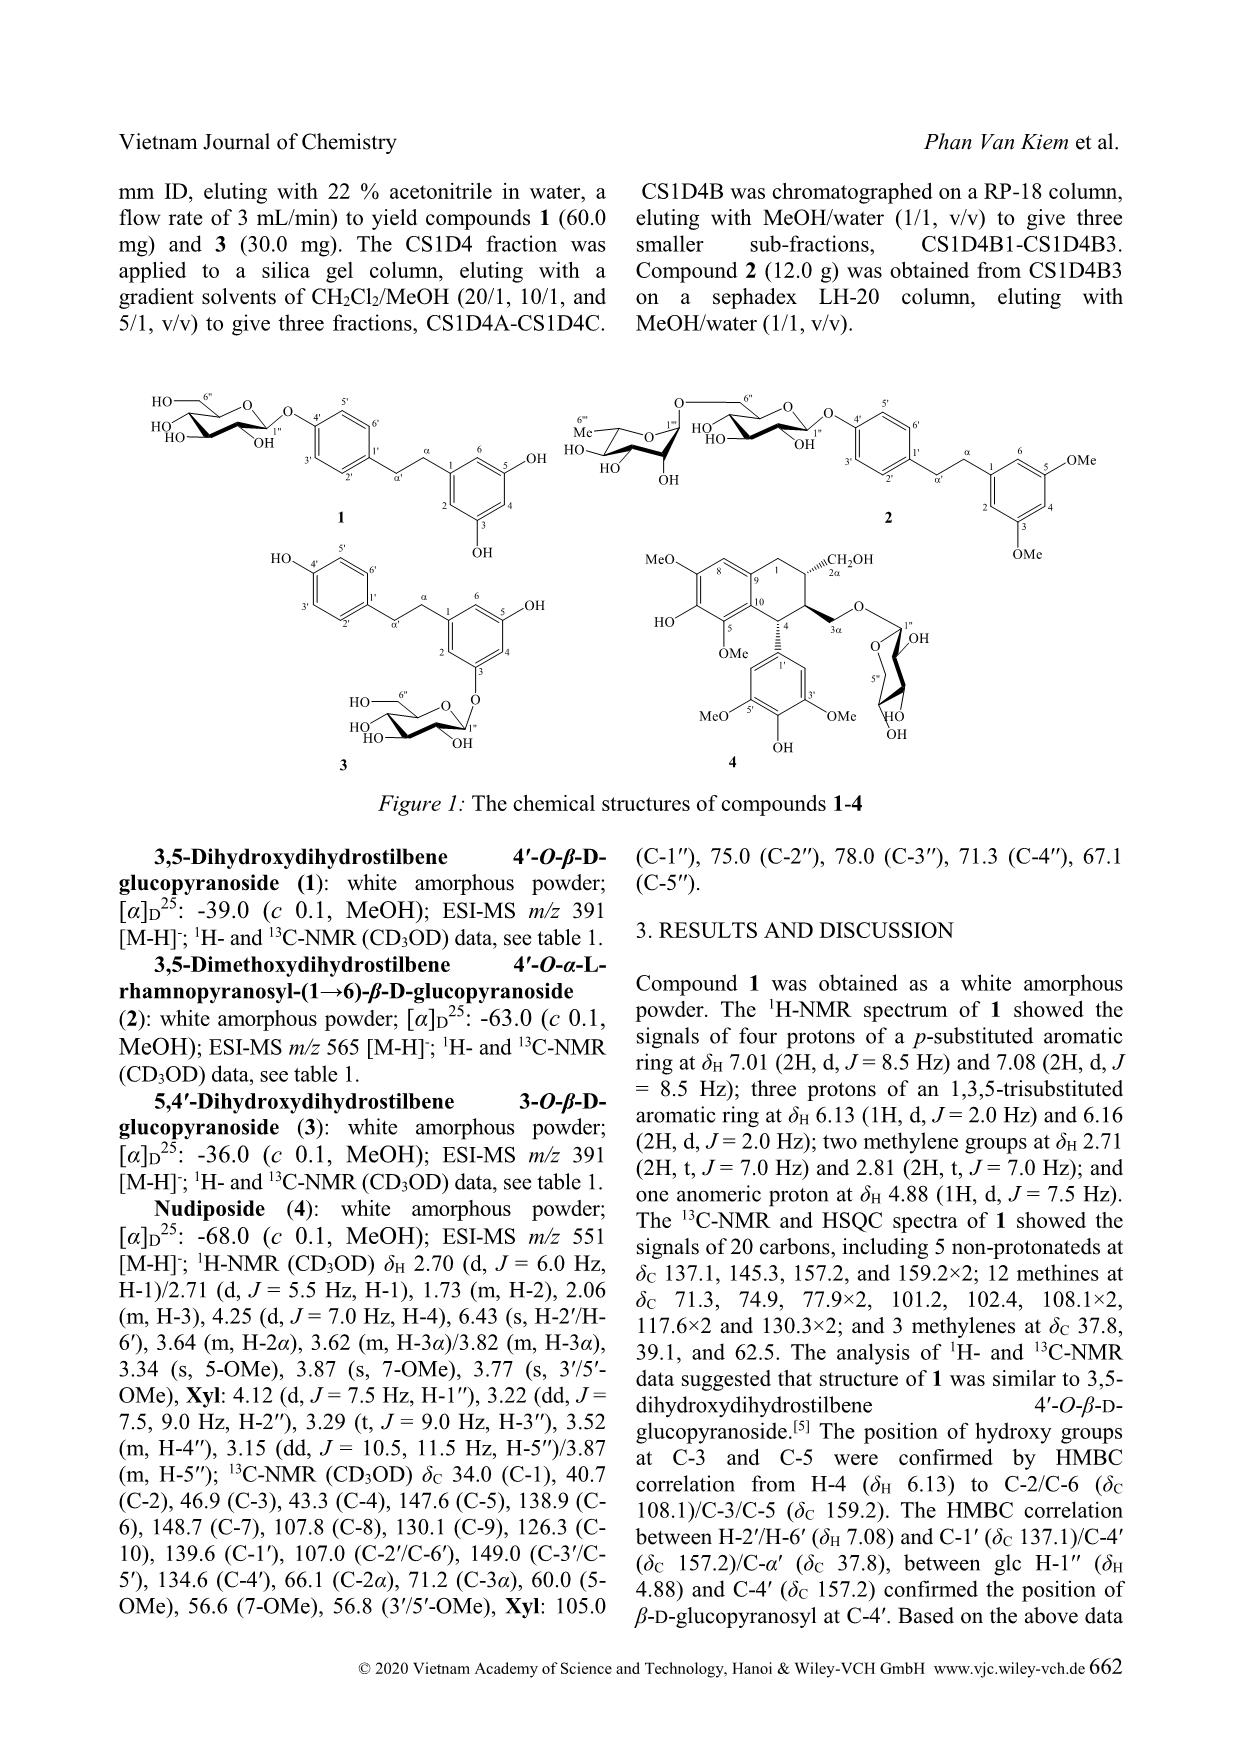 Dihydrostilbene glycosides and lignan from Camellia sasanqua trang 2